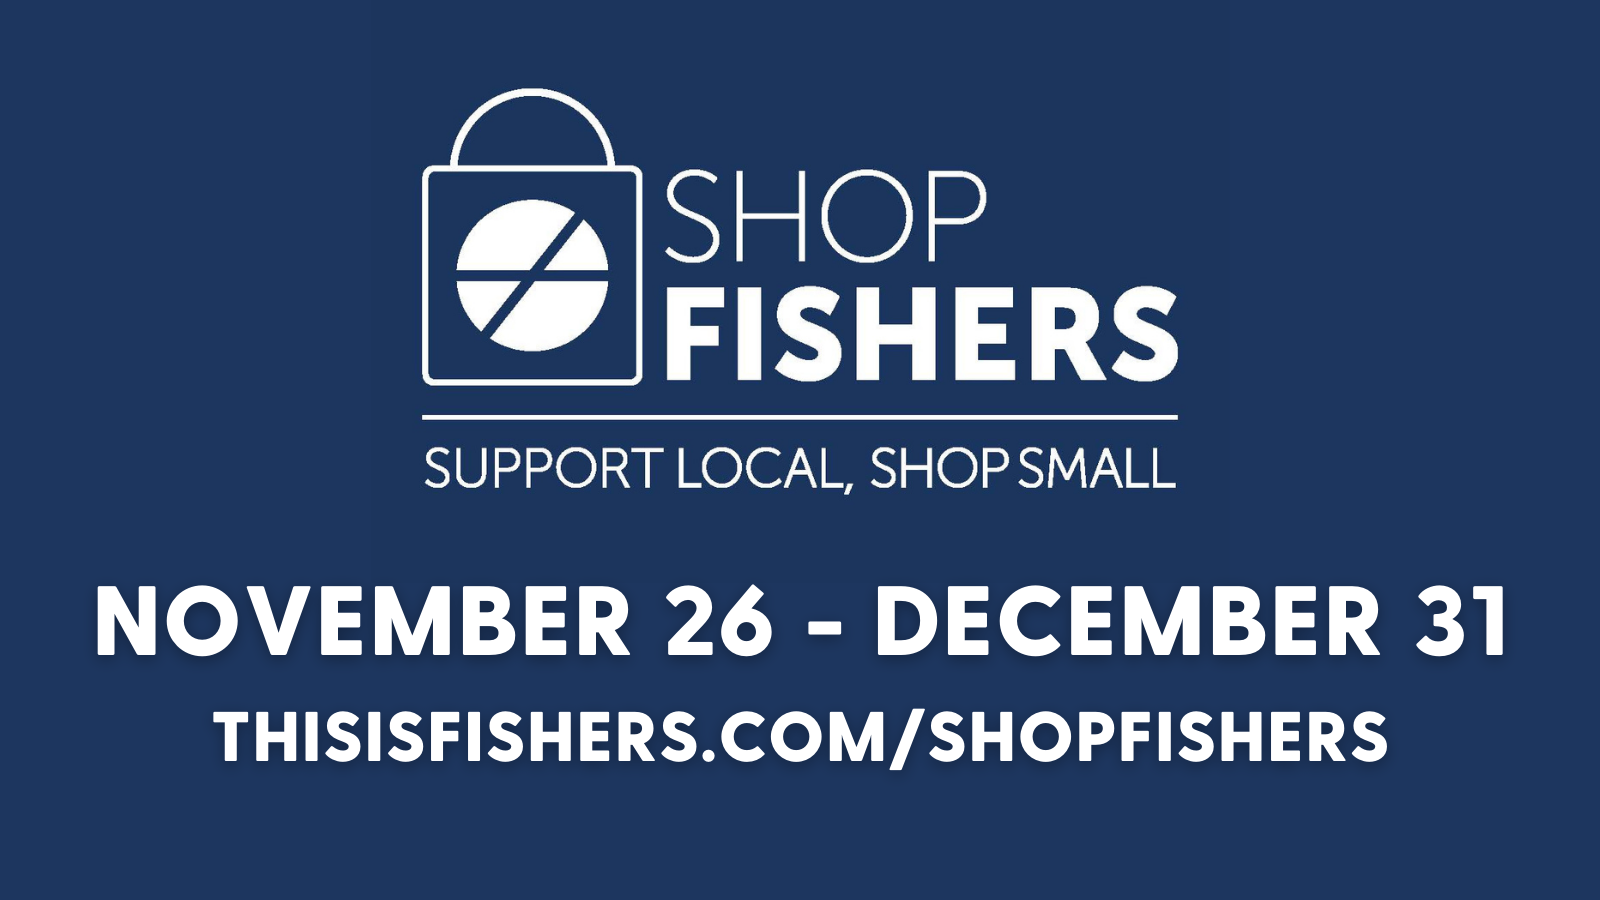 shop fishers shop local, shop small november 26 - december 31